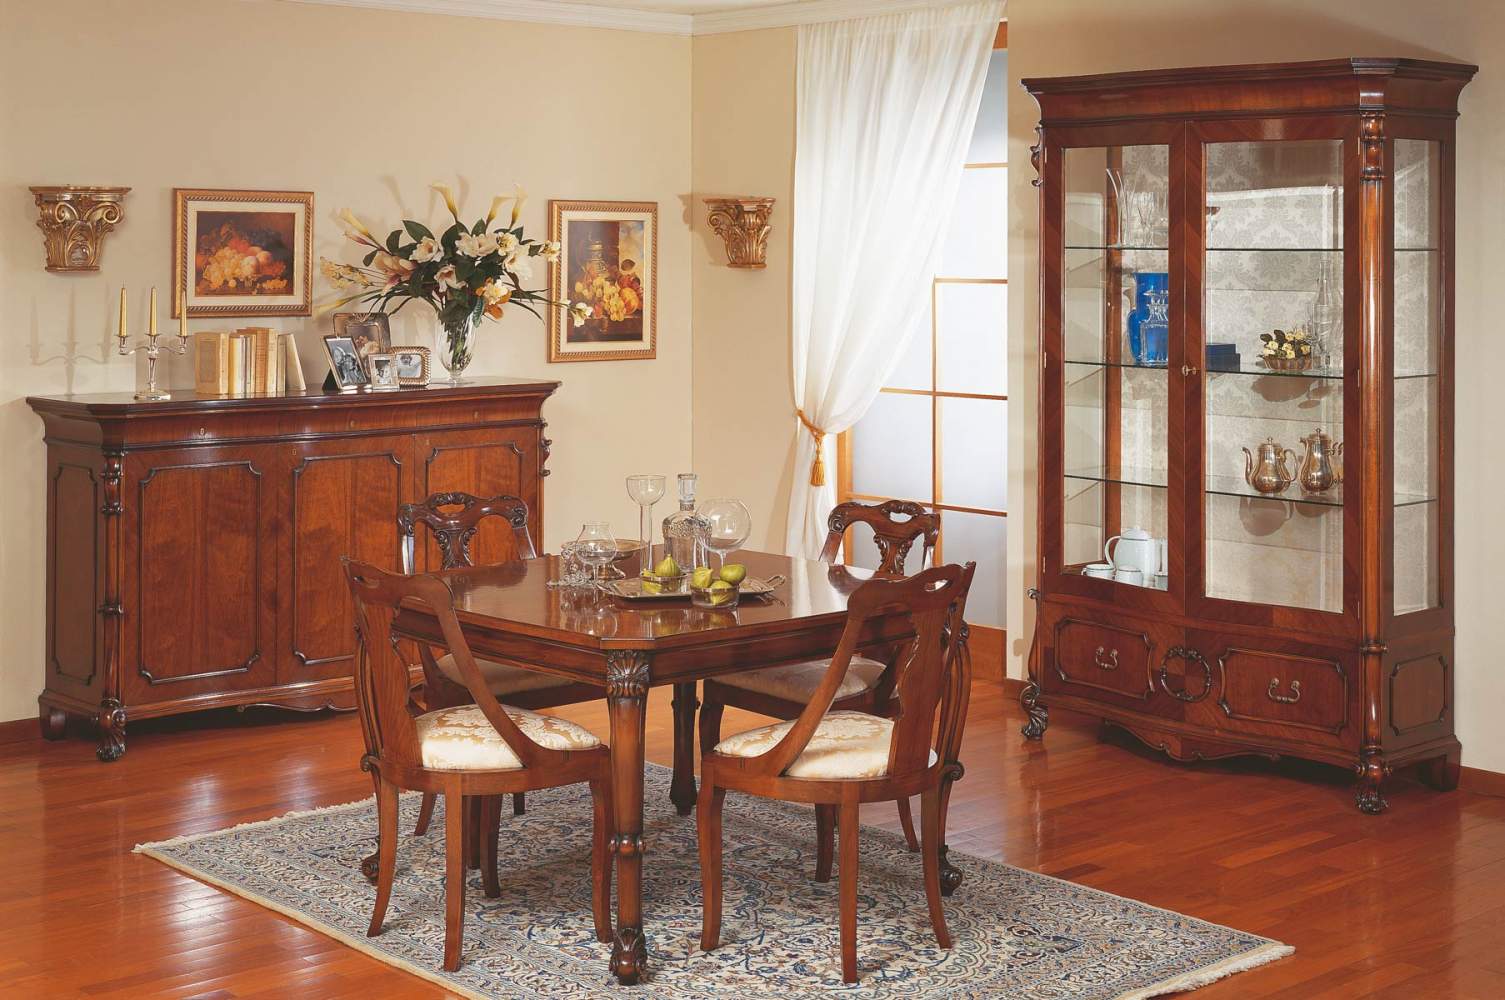 Classic 18th century Siciliano style dining room